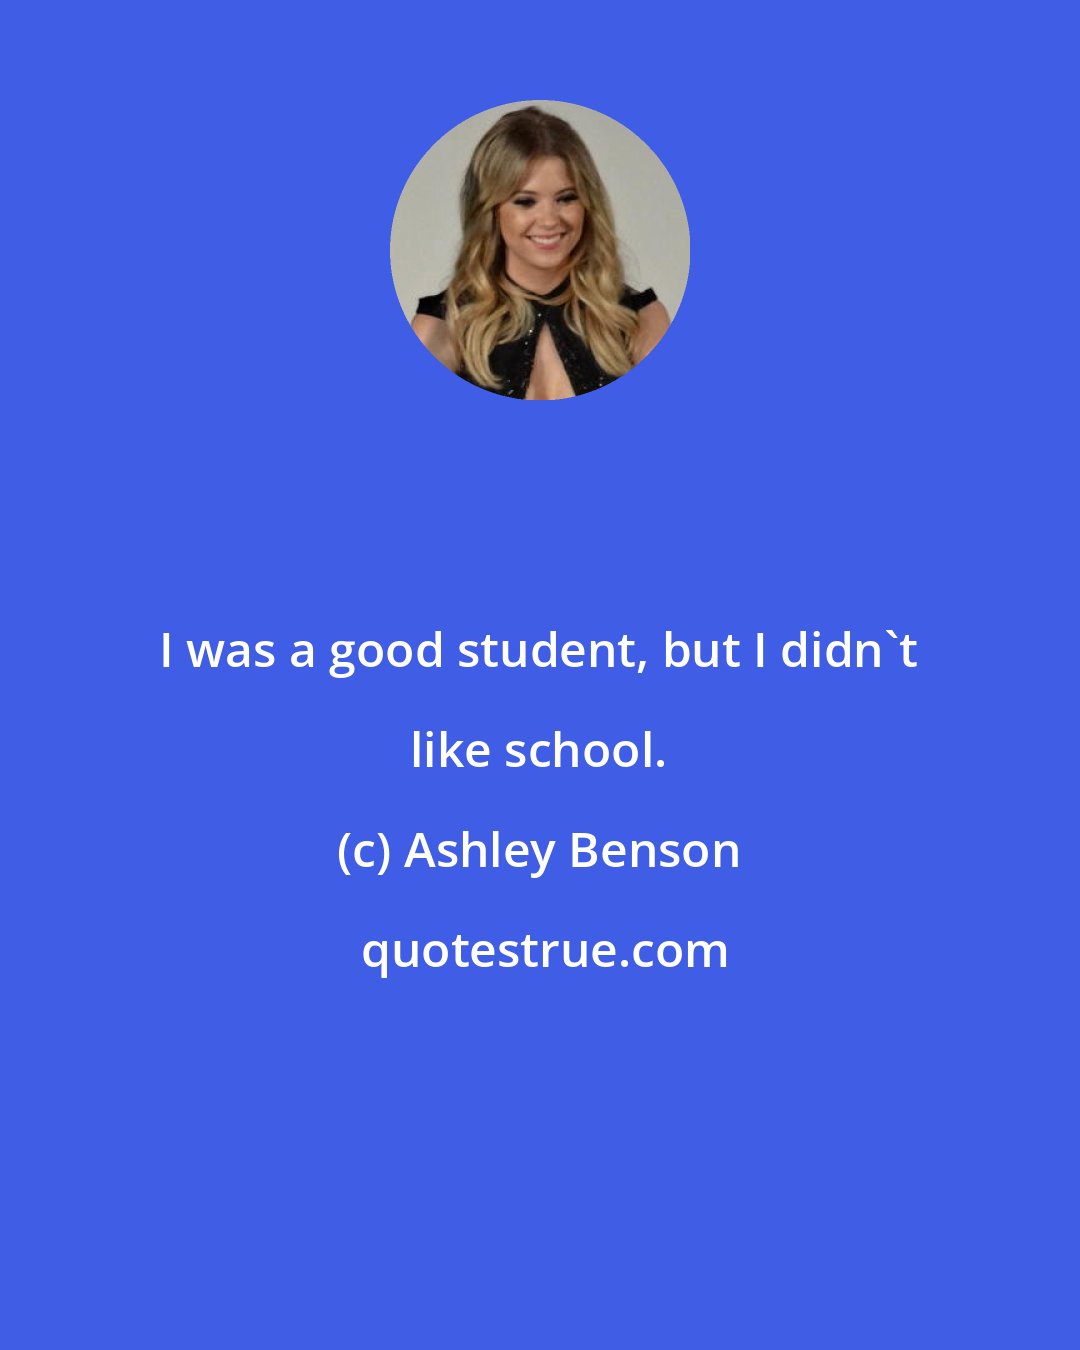 Ashley Benson: I was a good student, but I didn't like school.